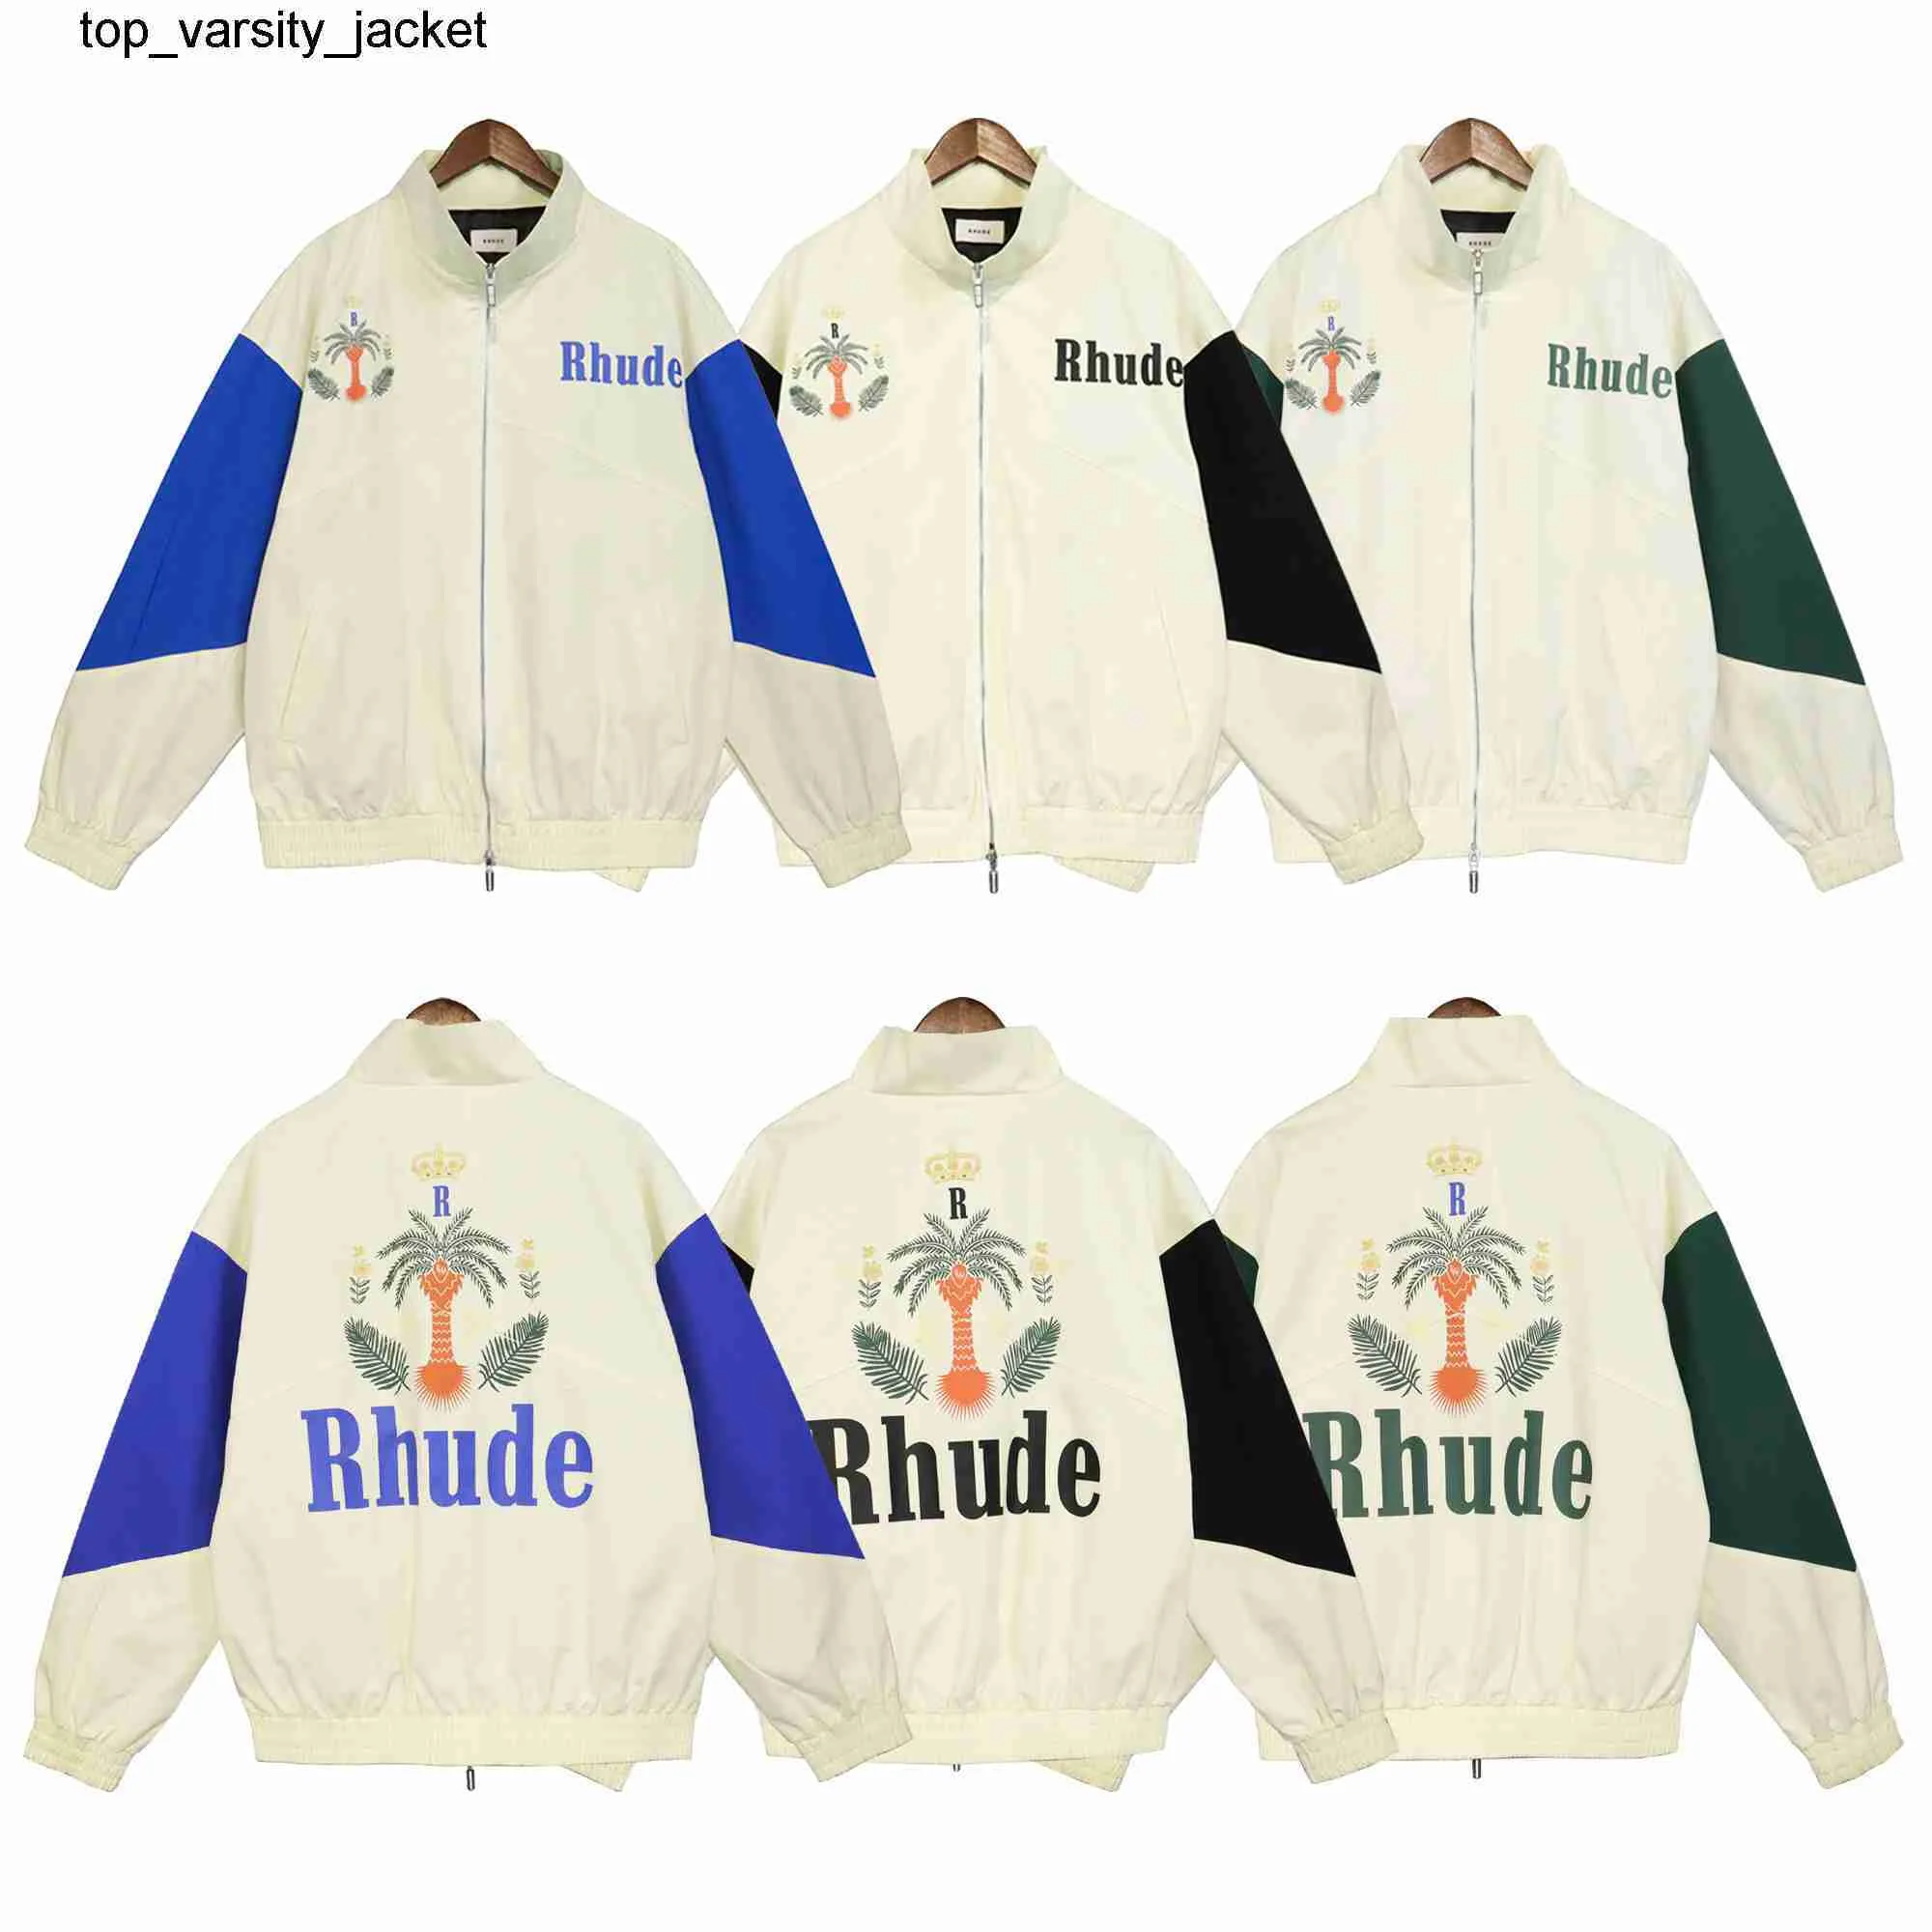 2023 designer fashion brand Rhude jackets Spring womens Men's Casual Jacket Windbreaker Couples Waterproof Outdoor varsity men Letterman Jacket